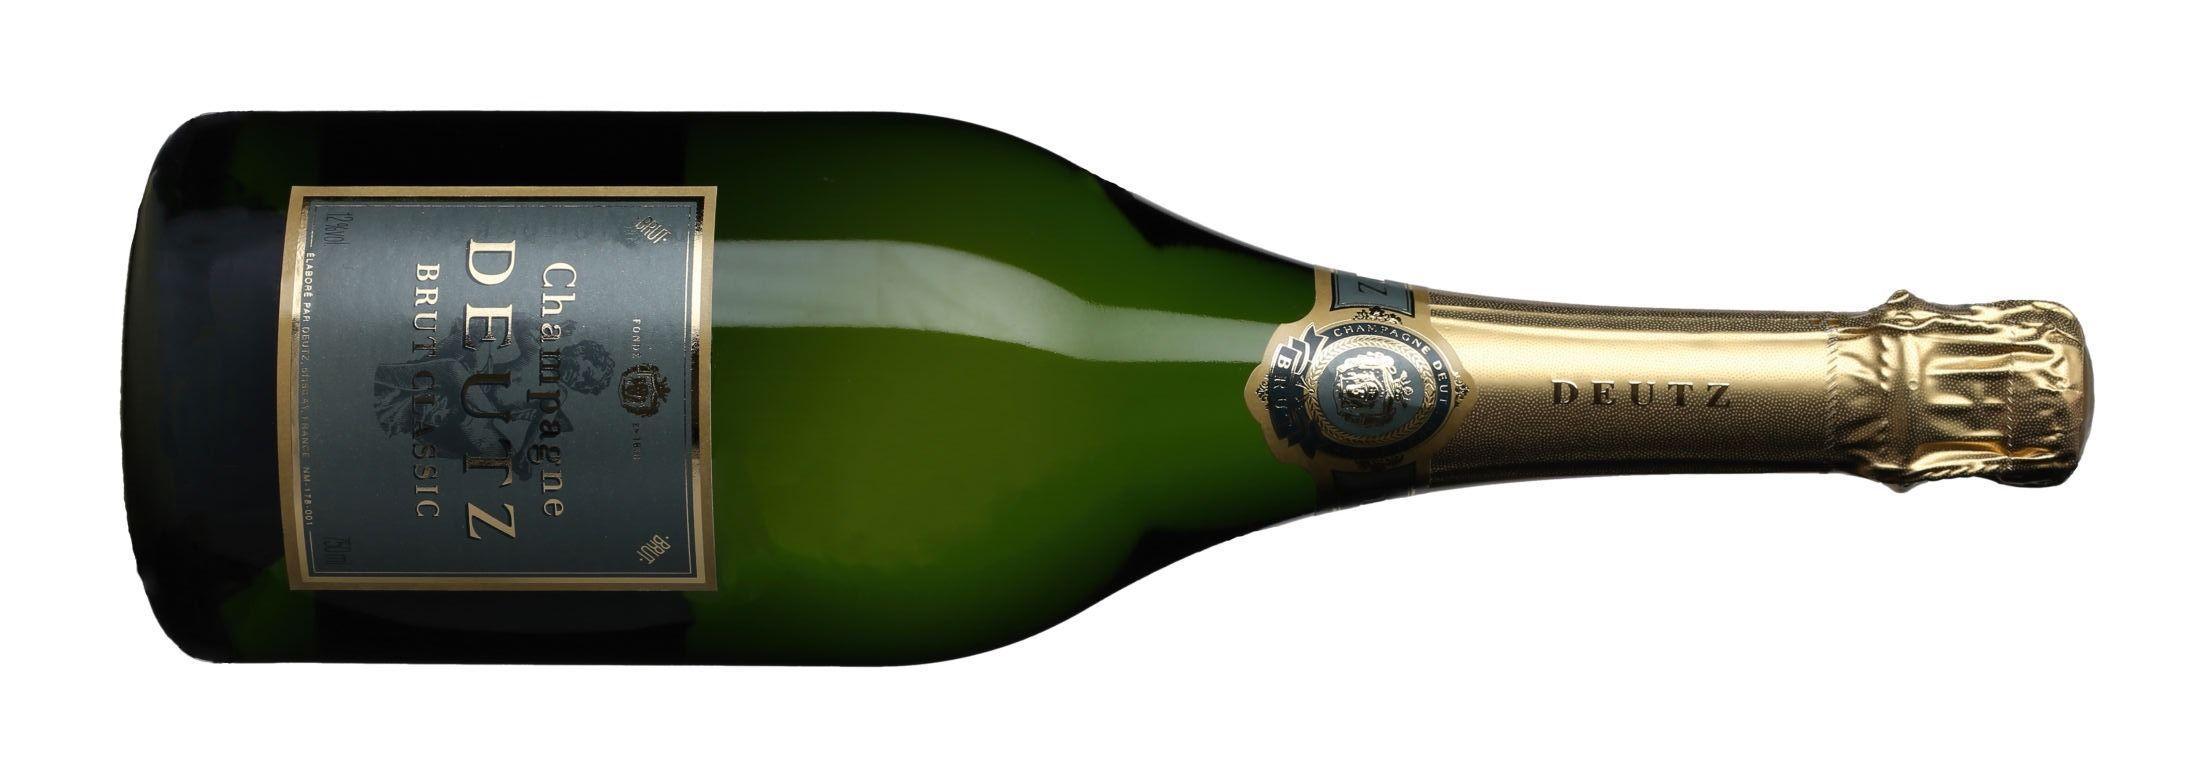 1160901 Bestillingsutvalget/lokale vinmonopol, Poeng: 89, Land/region: Frankrike, Champagne